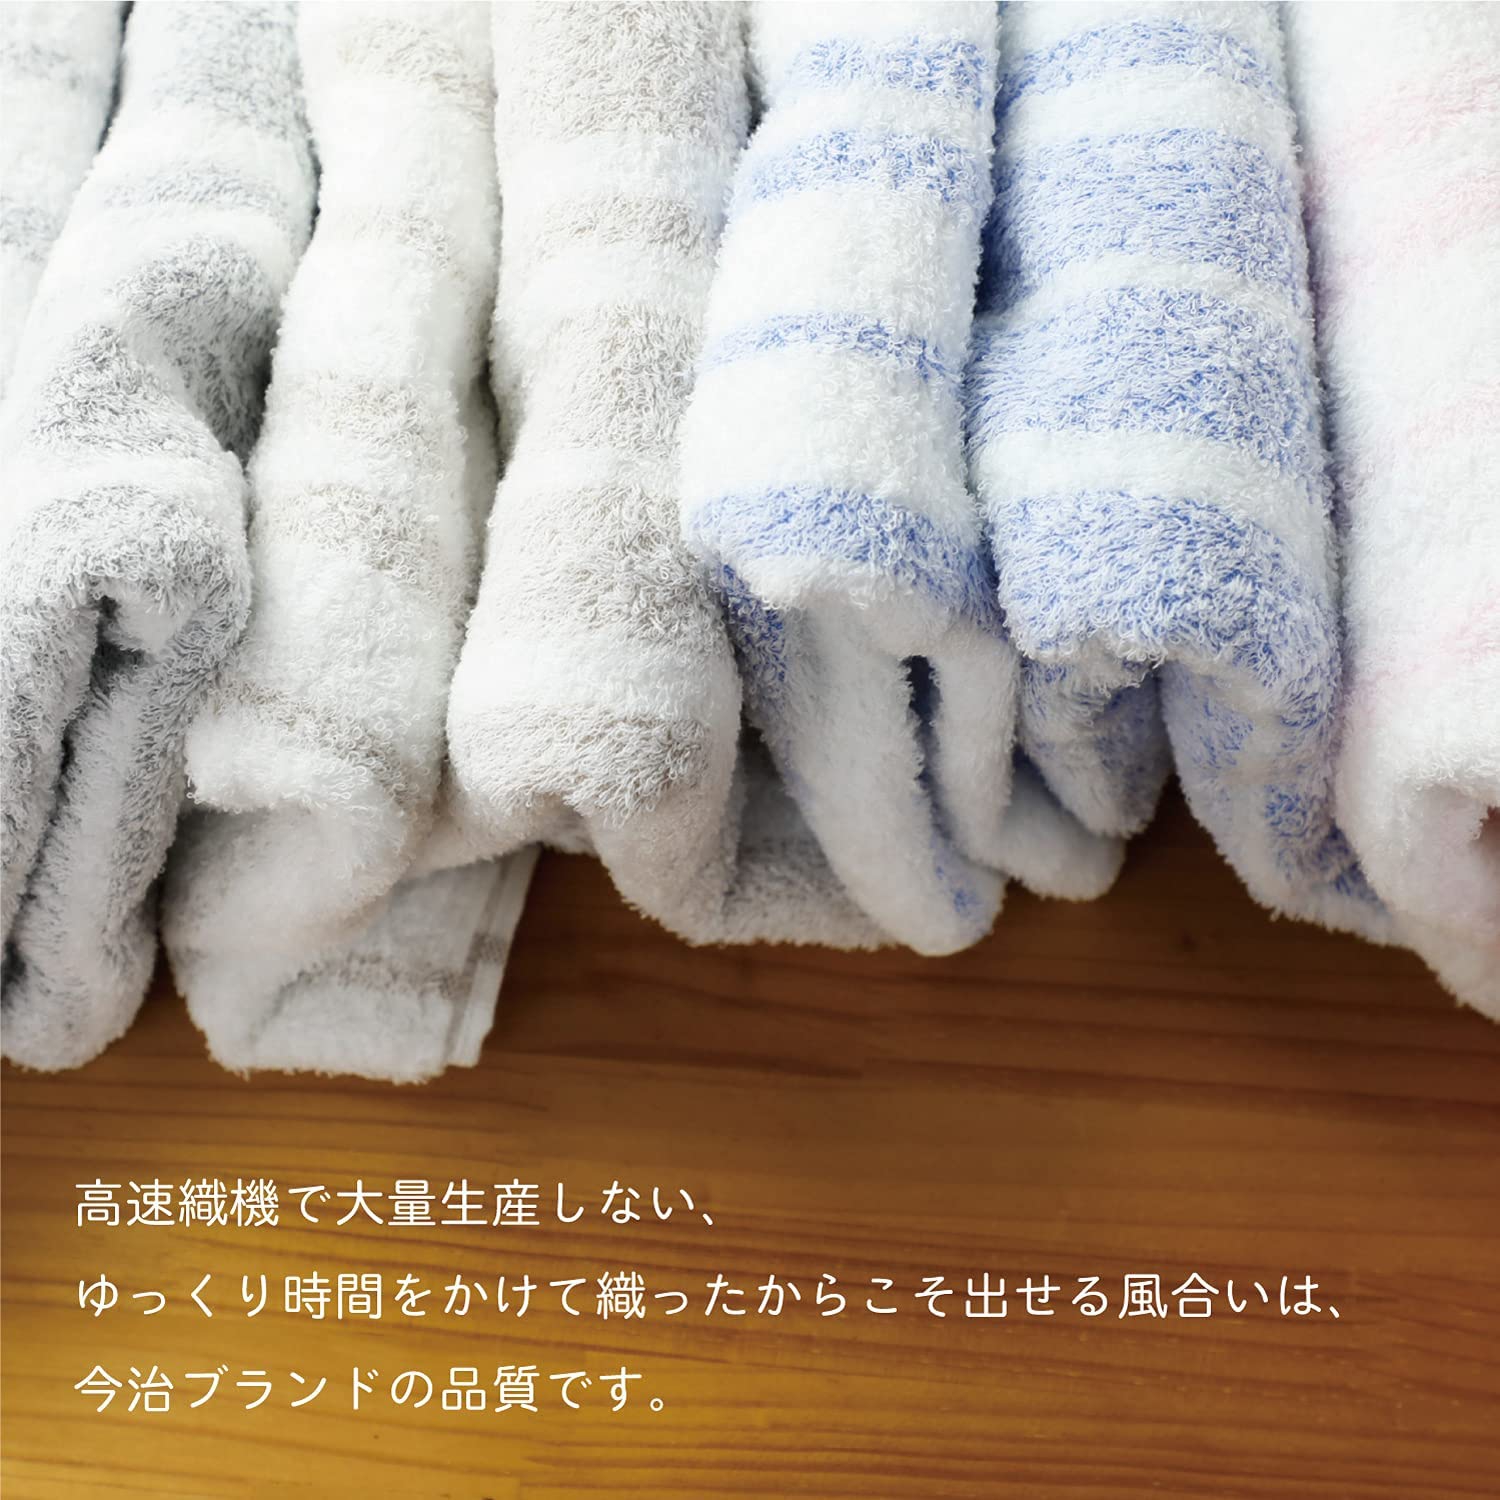 TANGONO(タンゴノ) Border towel バスタオルの商品画像サムネ8 